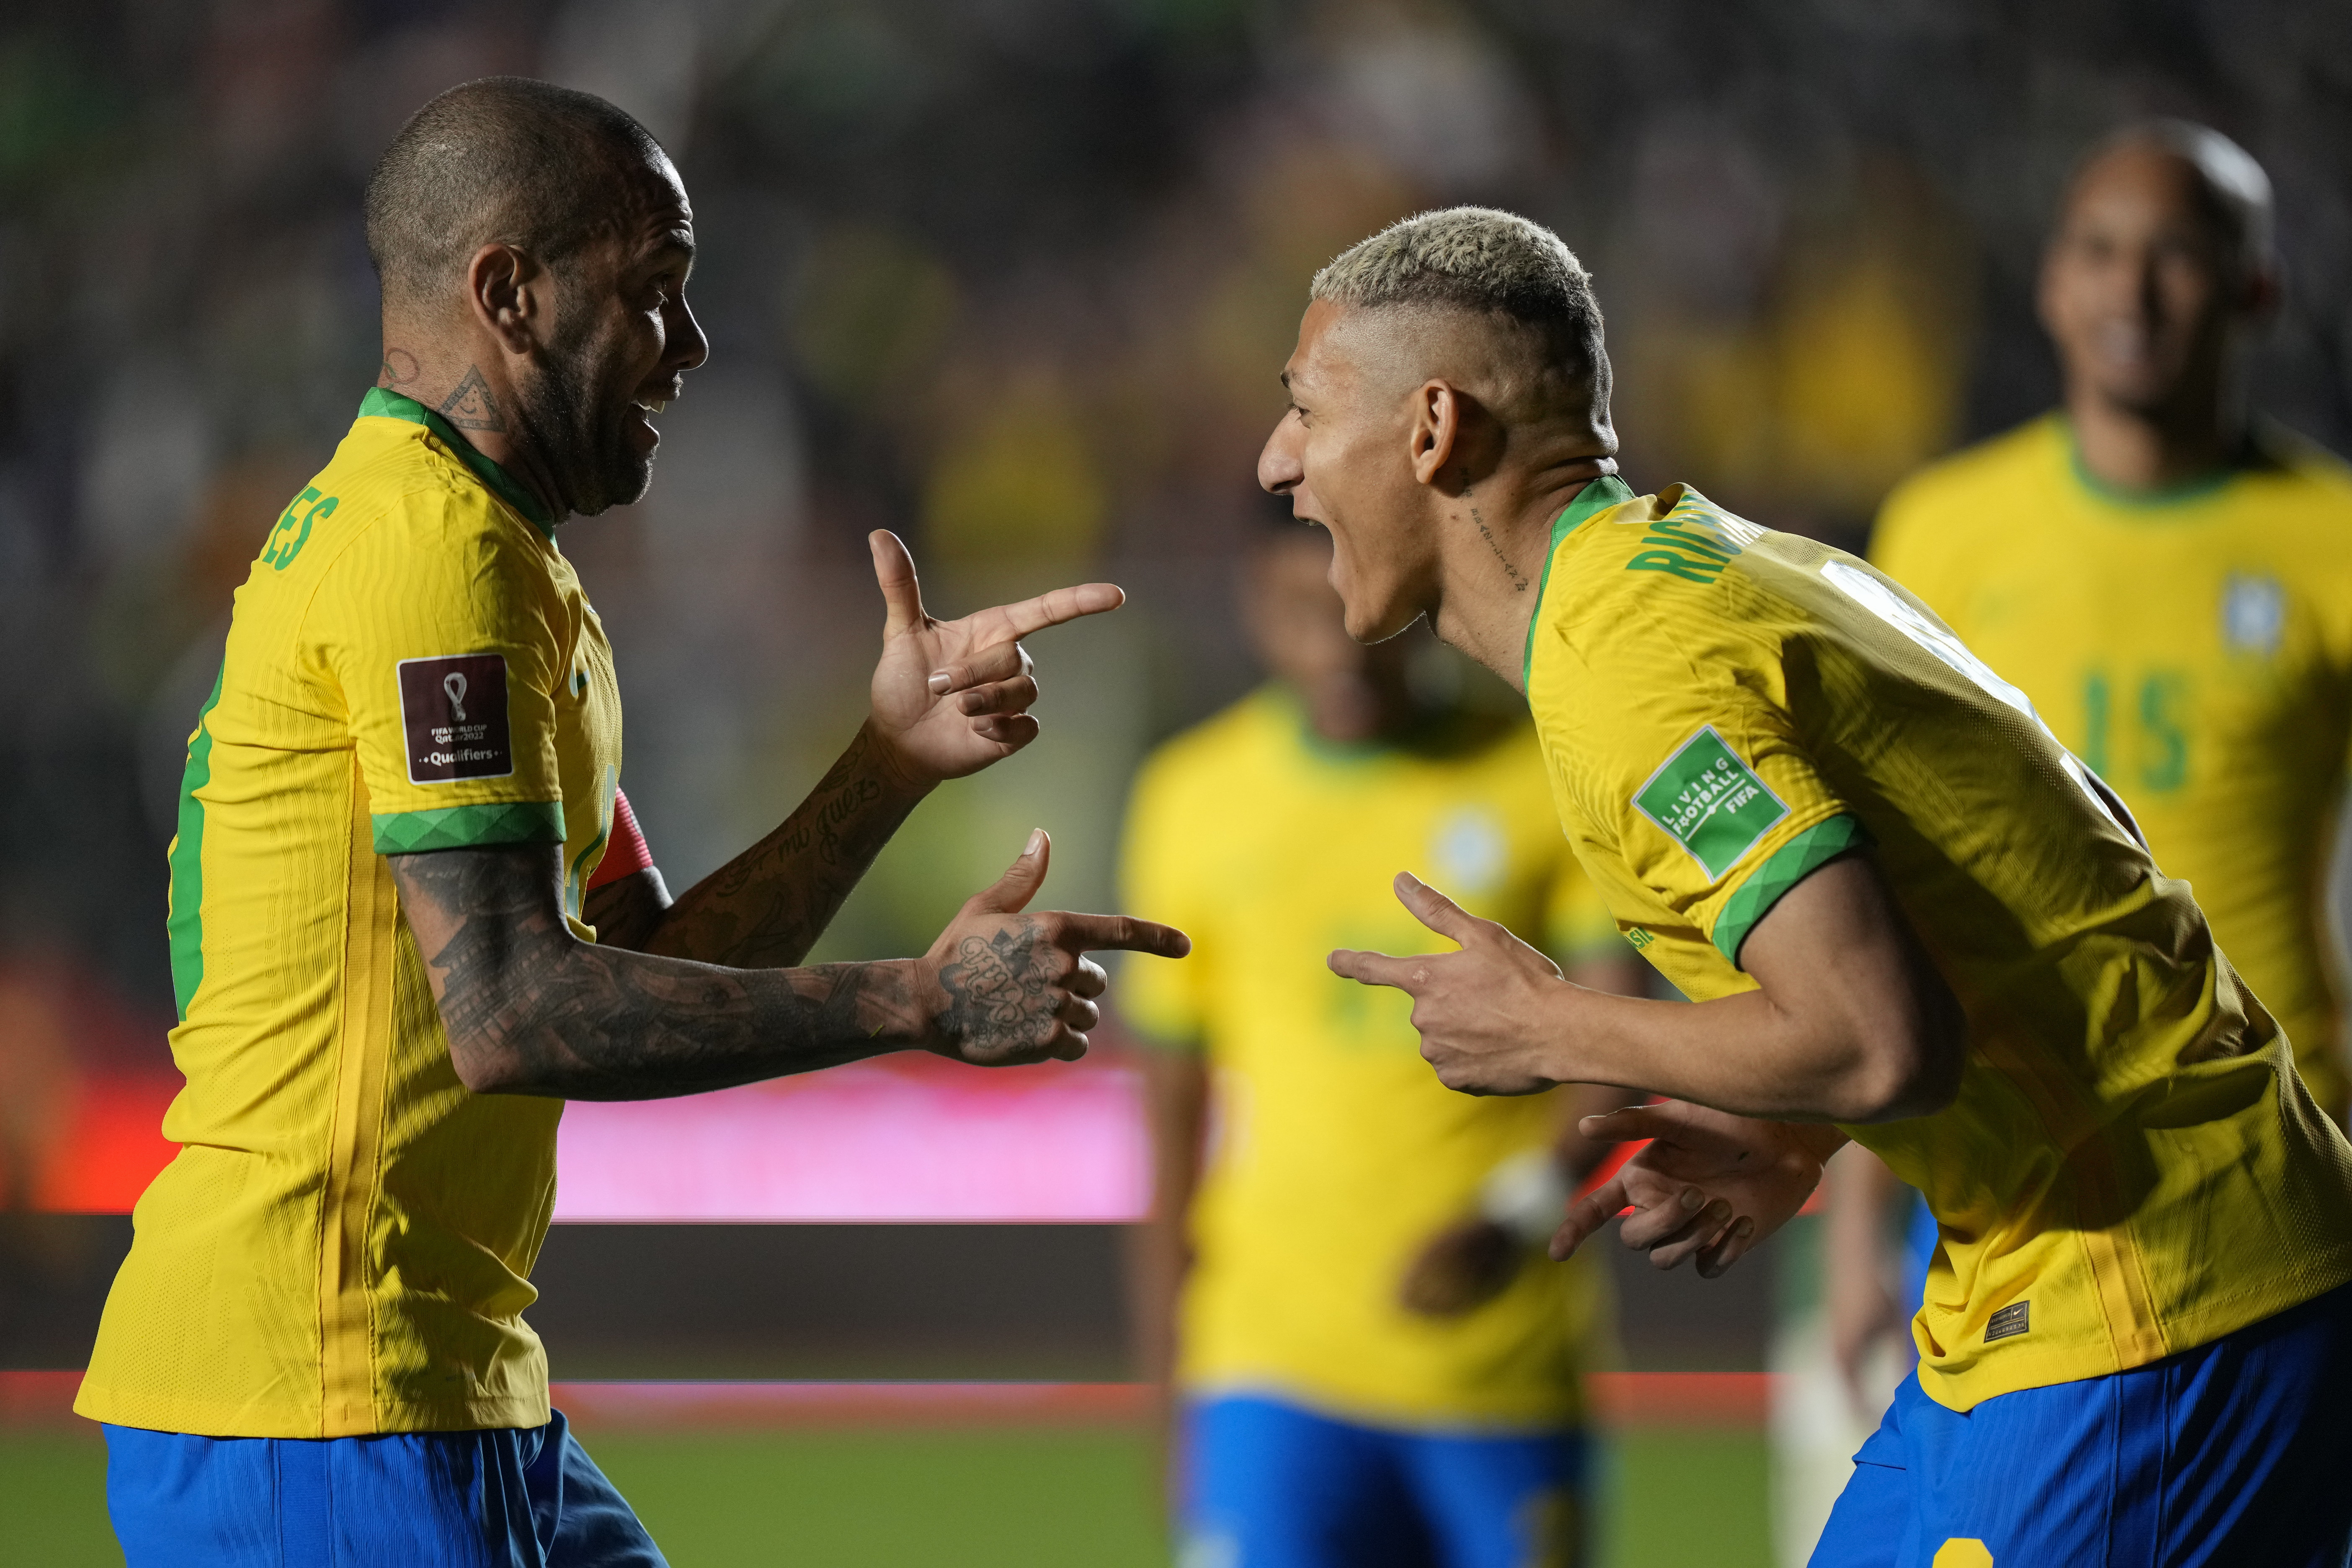 Brazilian football stars play CS:GO during World Cup in Qatar